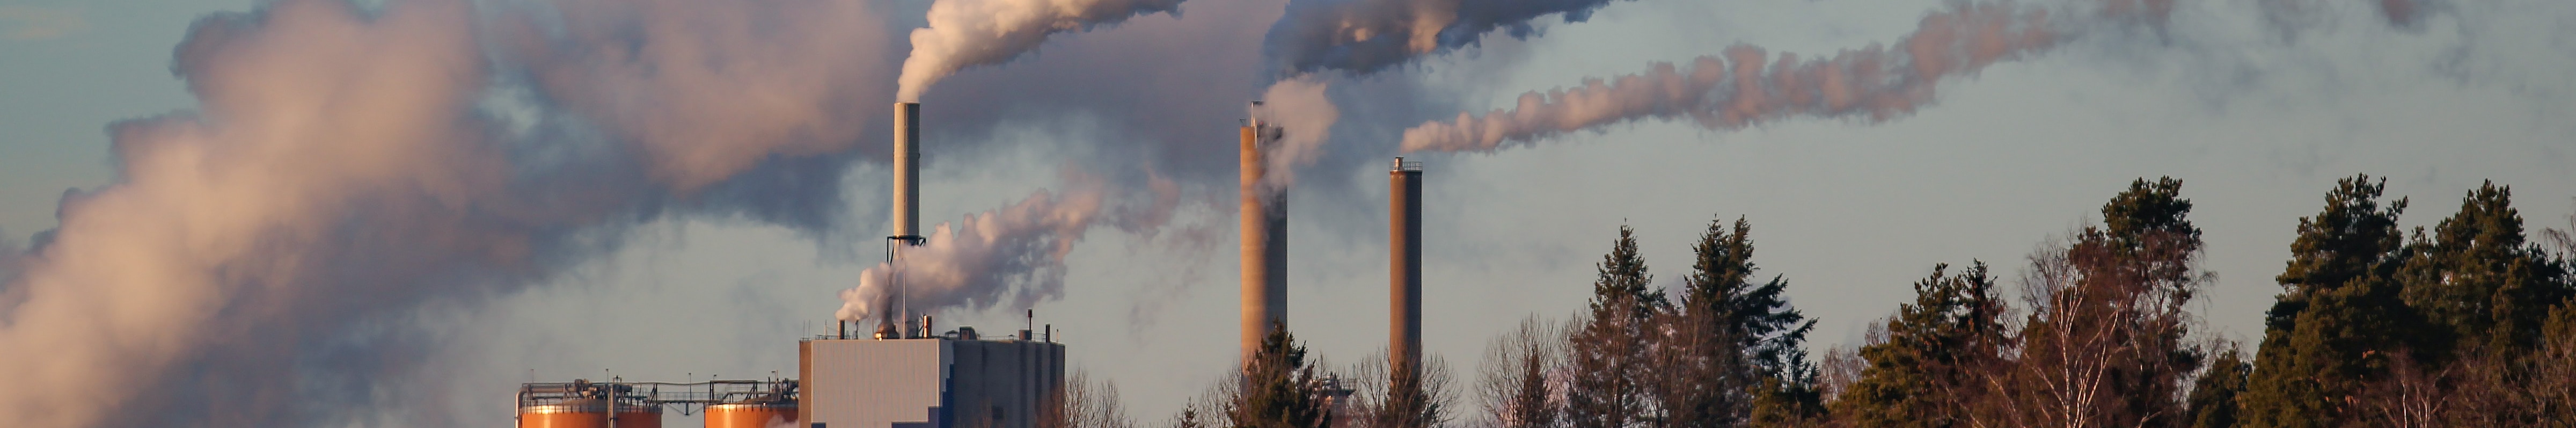 In 2022, Croda International emitted 85.5 t of air pollutants, deteriorating human health